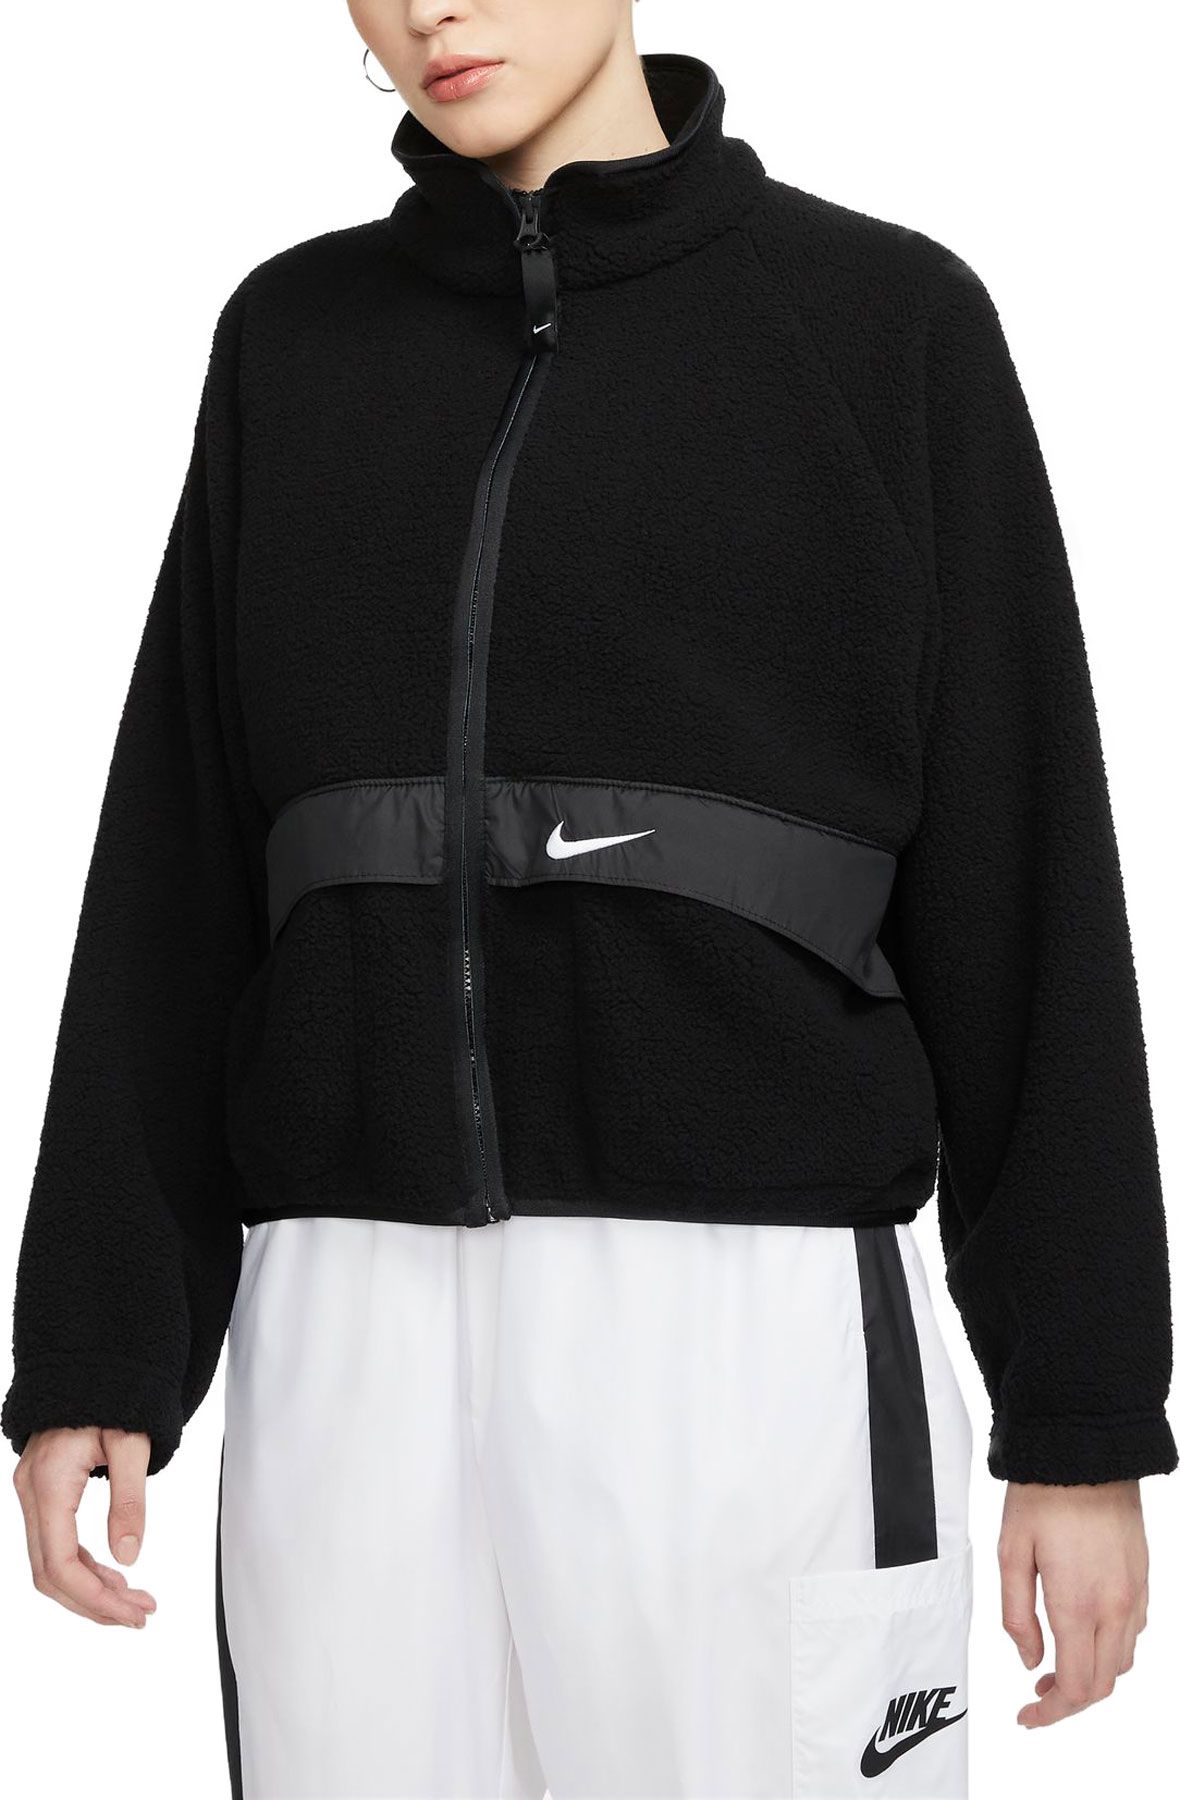 Nike Women's Essential Jacket